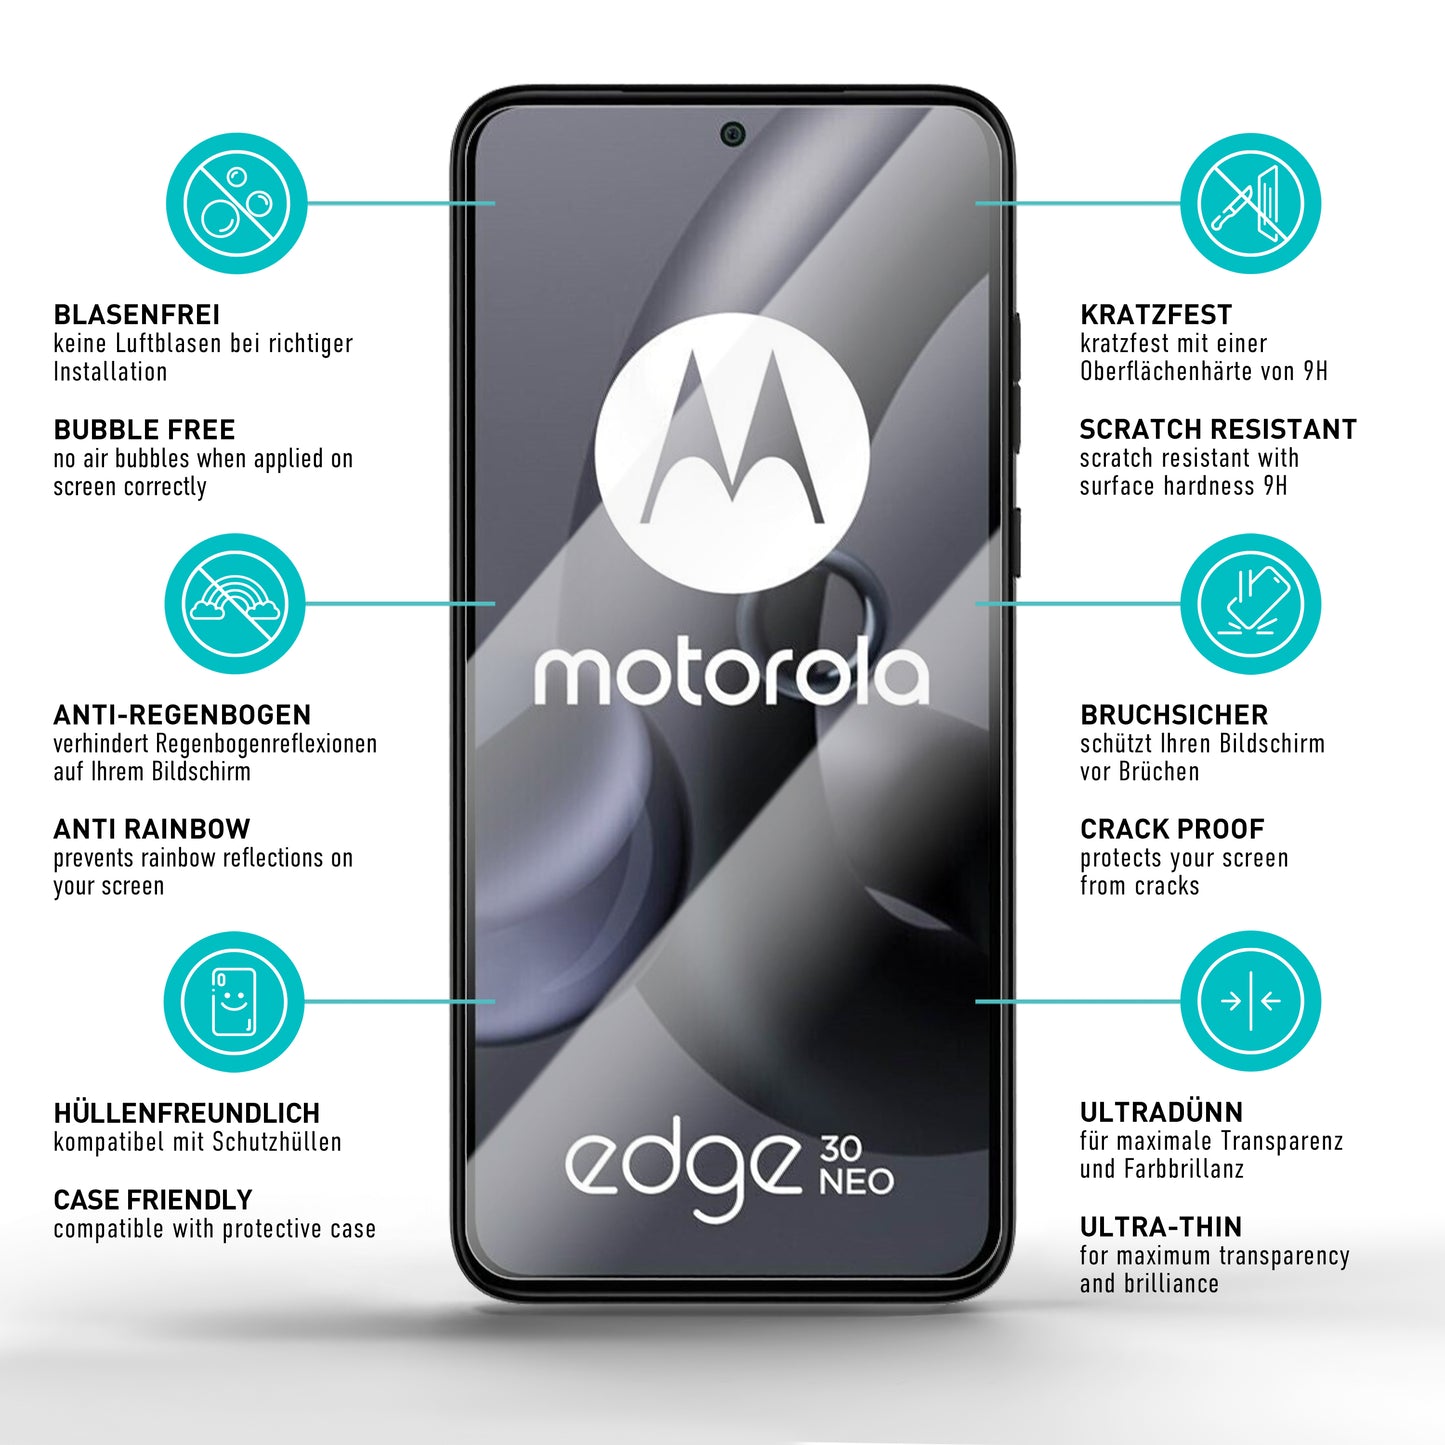 smartect Schutzglas Klar für Motorola Edge 30 Neo, 3 Stück